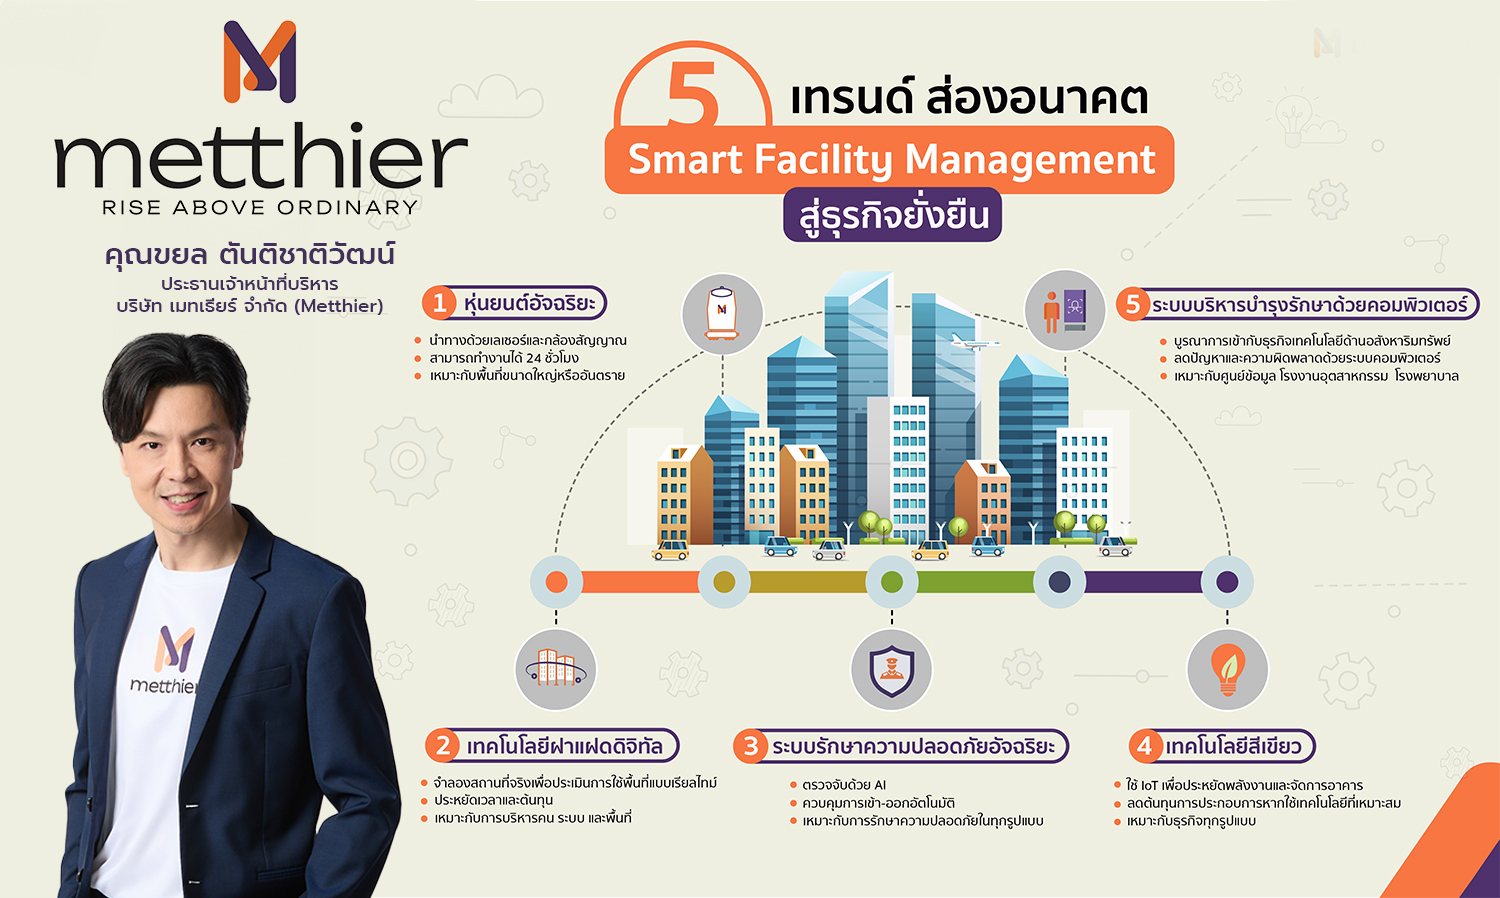 Metthier อัปเดต 5 เทรนด์ Smart Facility Management สู่ธุรกิจยั่งยืน